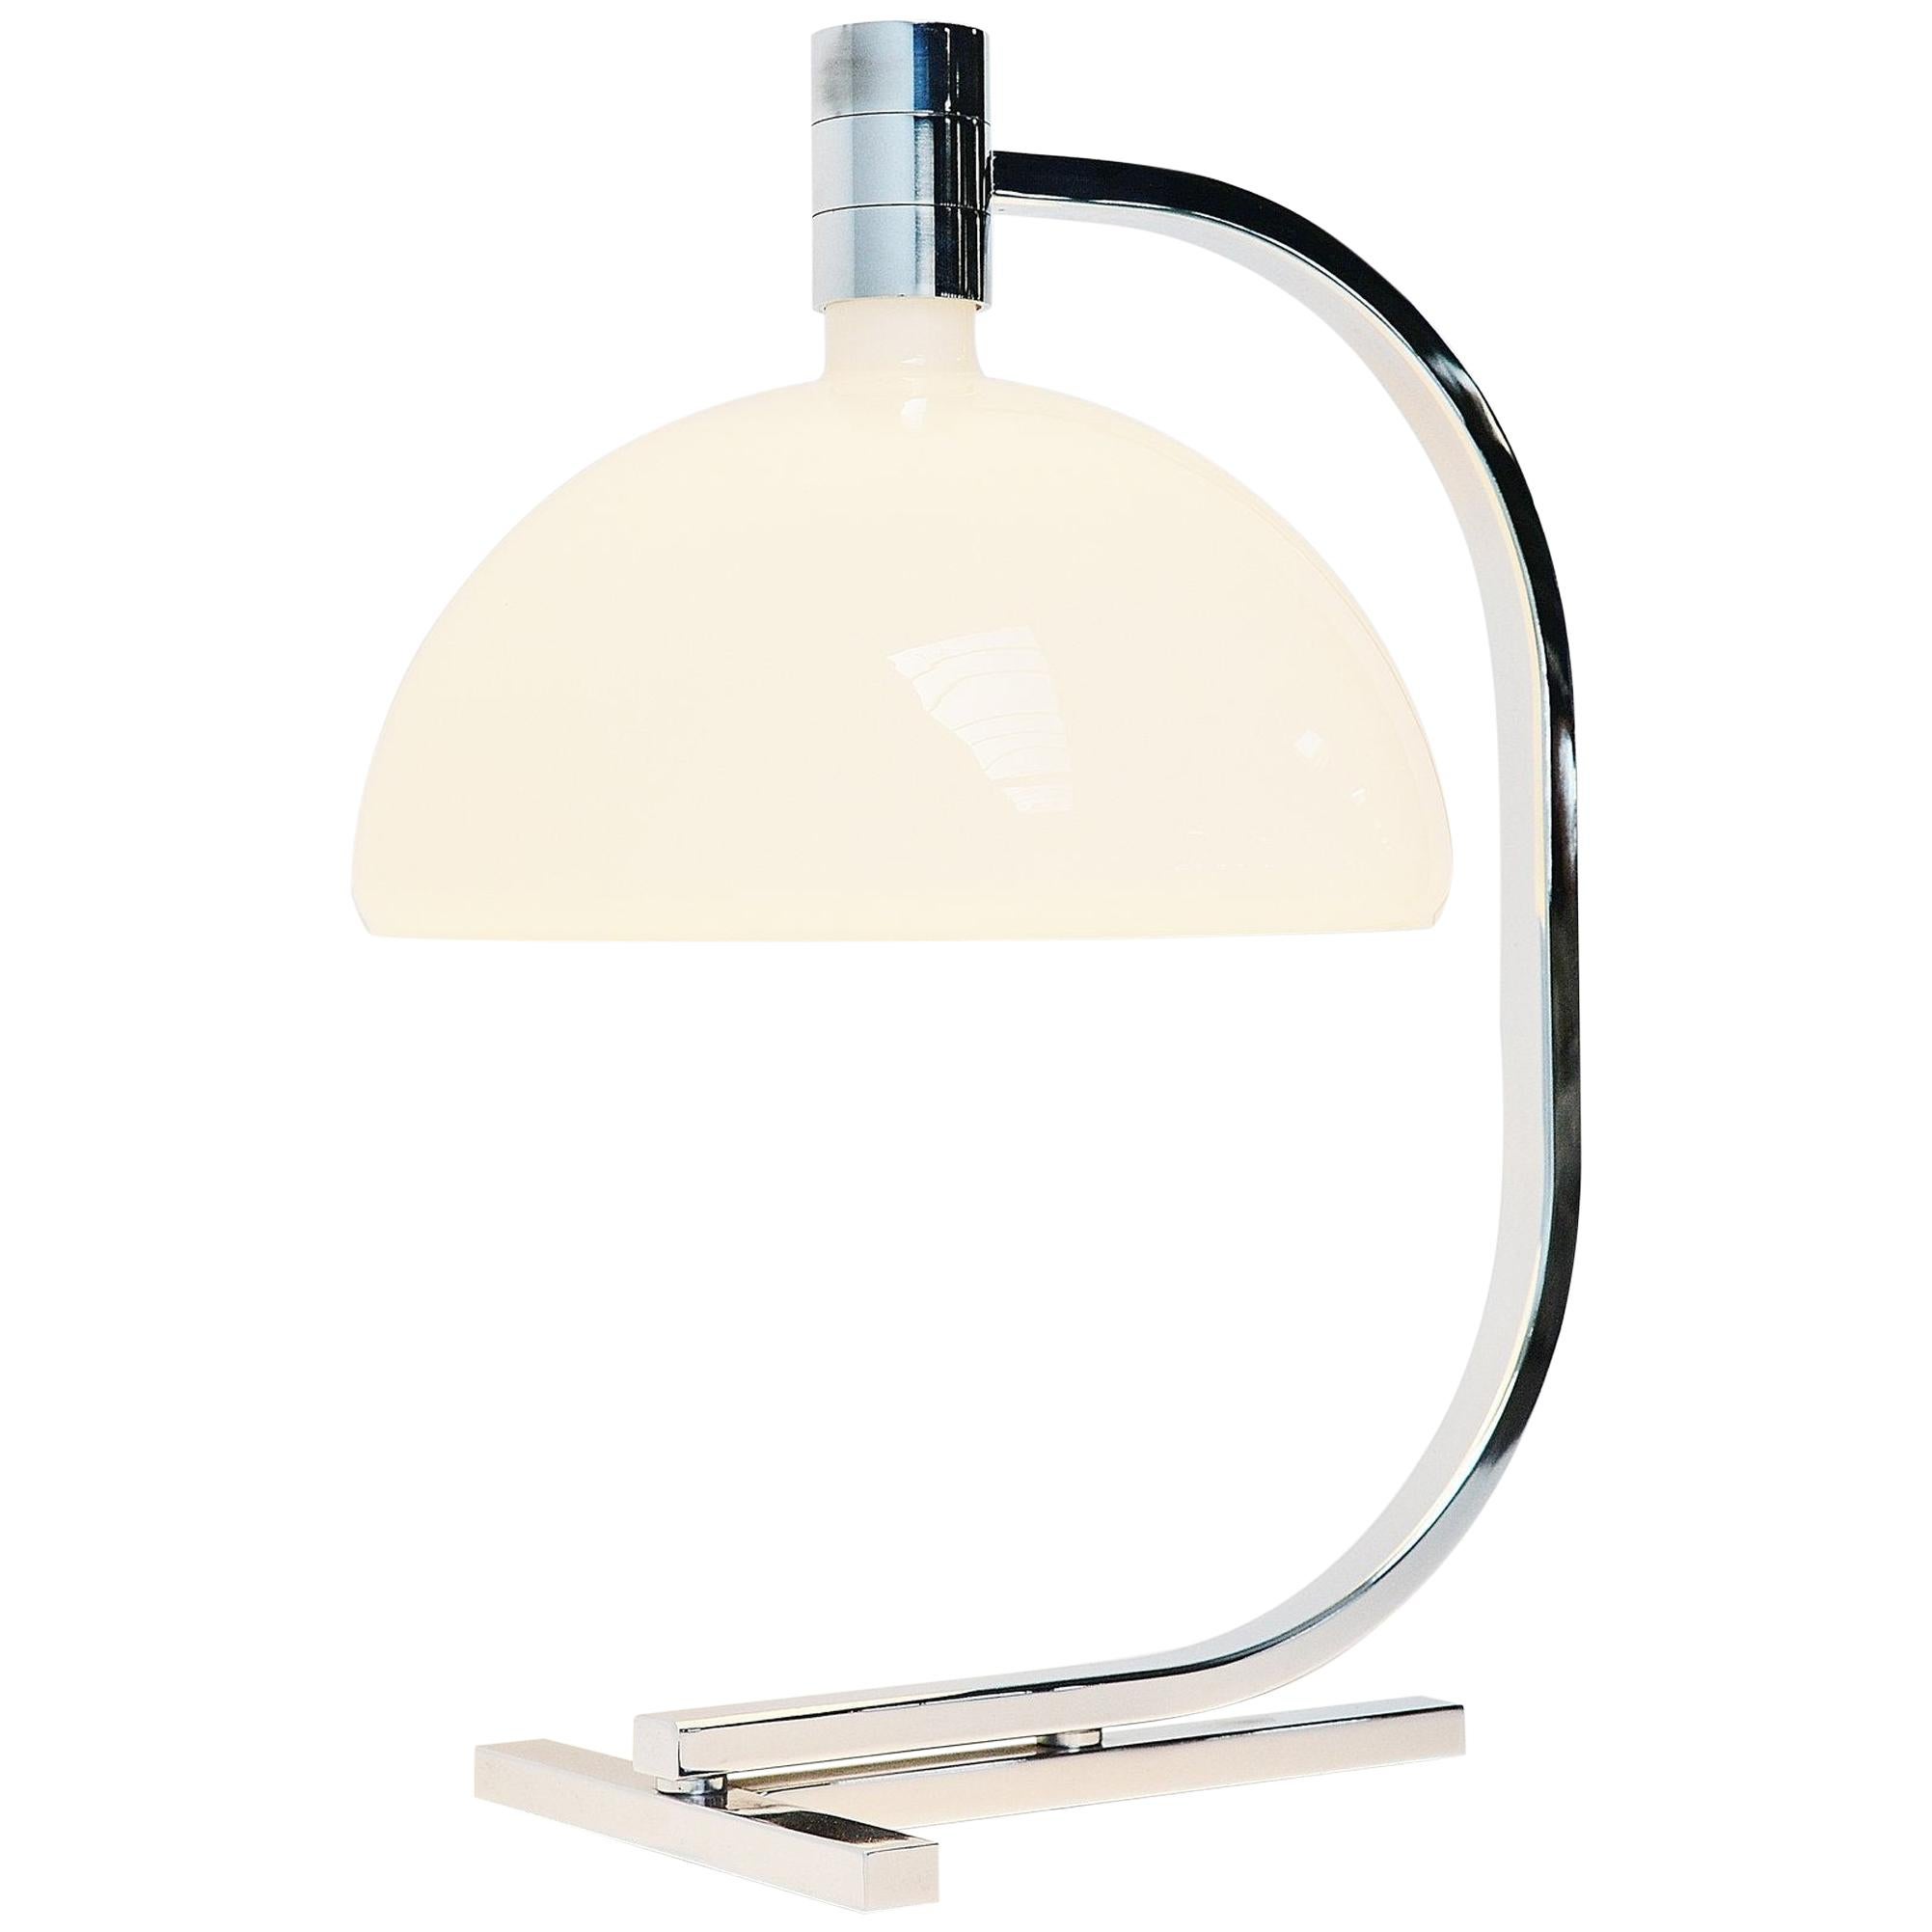 Franco Albini Franca Helg Sirrah AM/AS Table Lamp, Italy, 1969